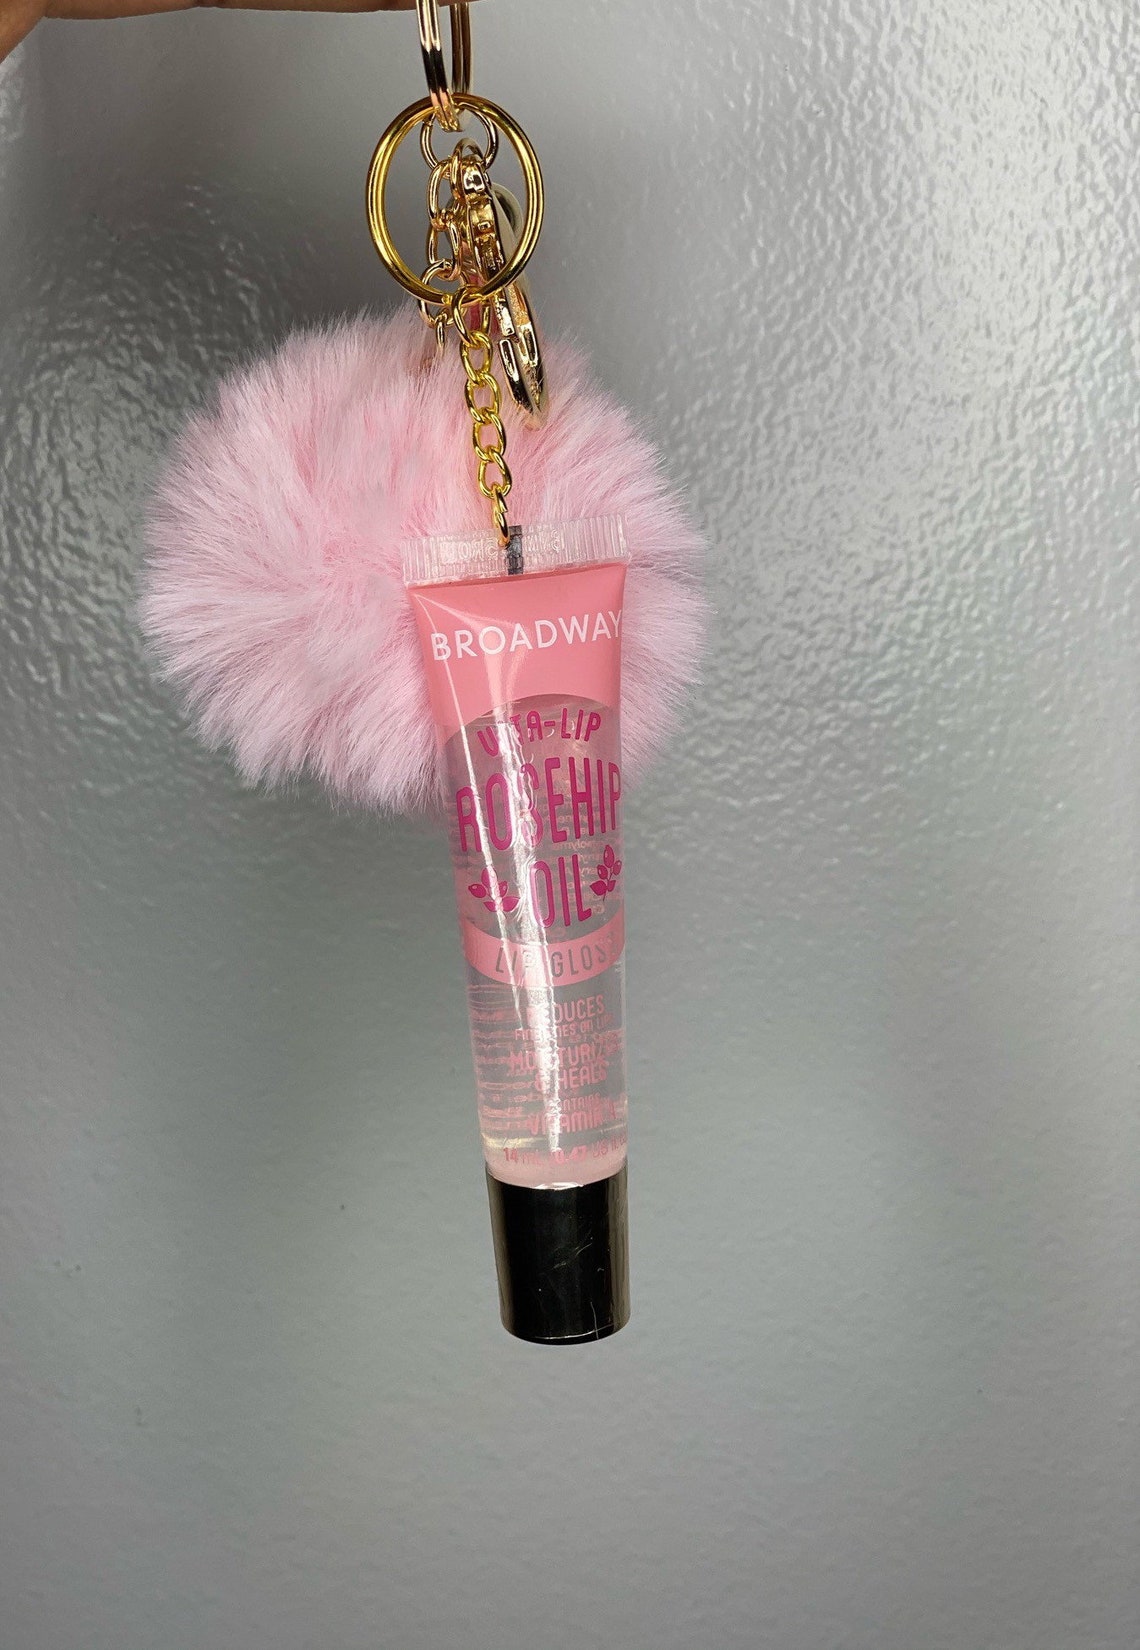 Customized Lip Gloss And Pom Pom Keychain Set Etsy